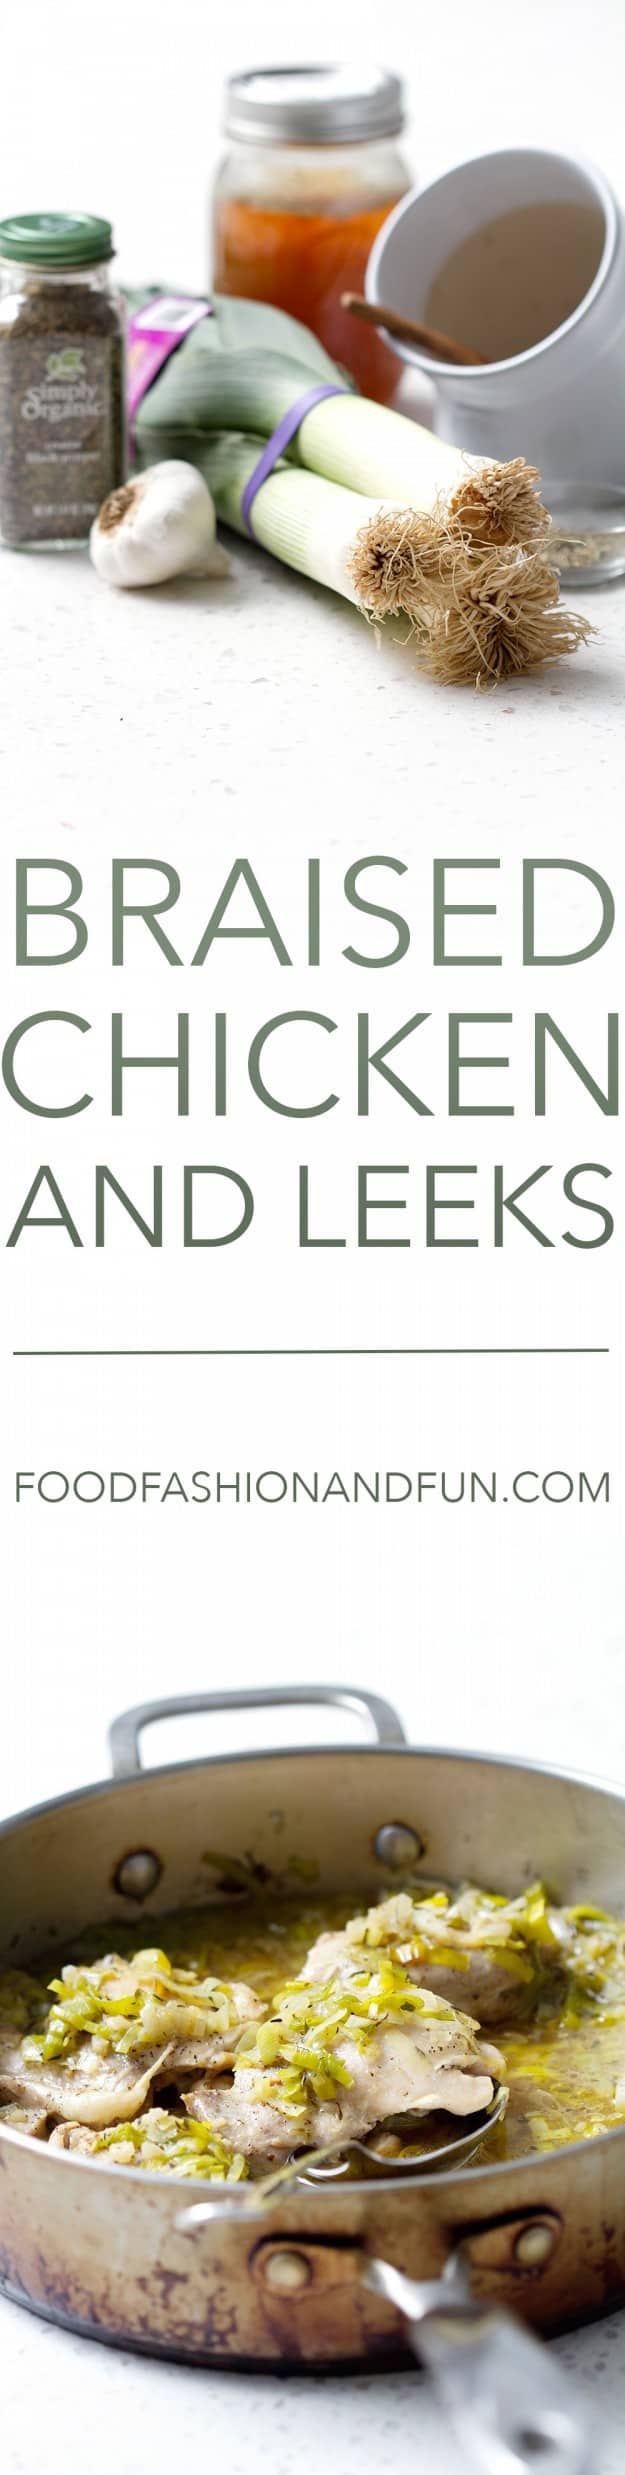 Braised Chicken and Leeks